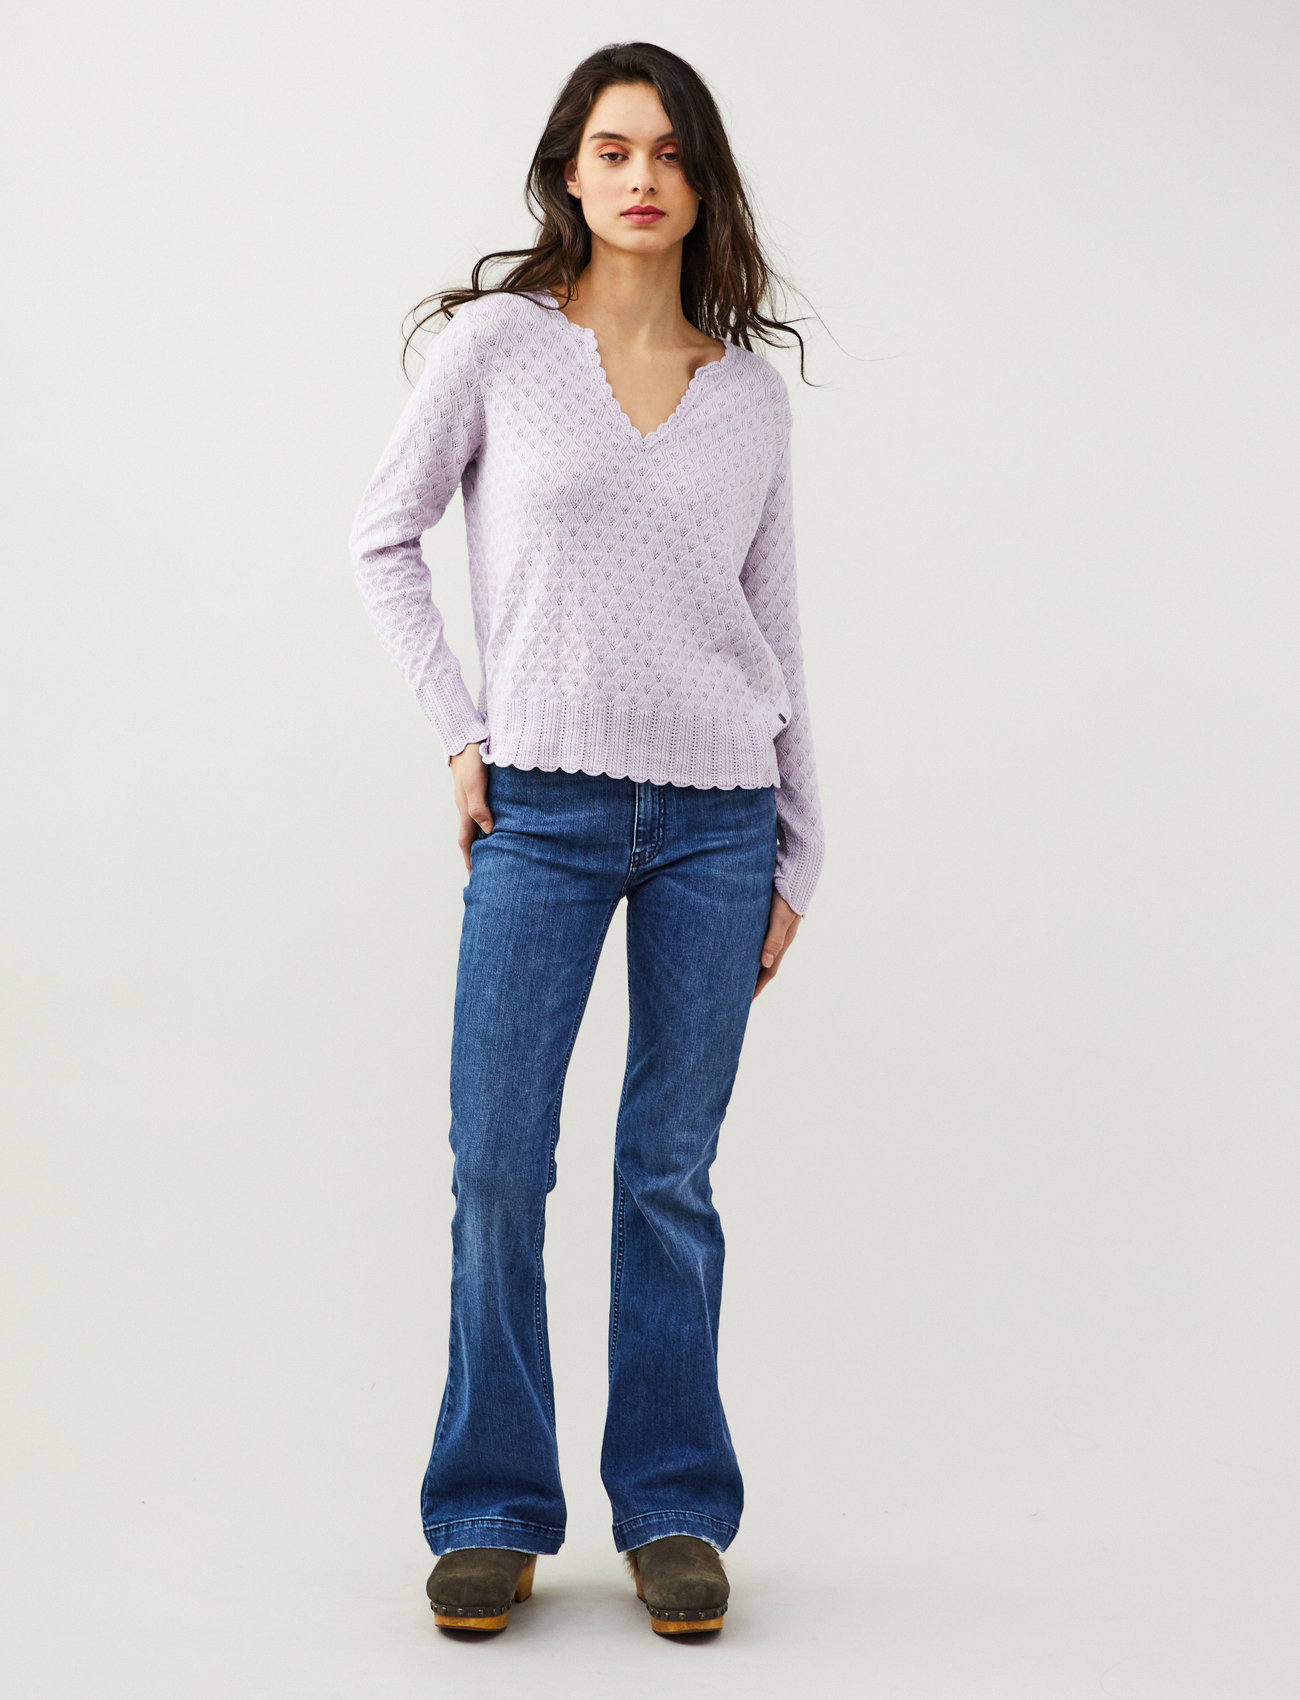 ODD MOLLY - Madeleine Sweater - soft lilac - 0